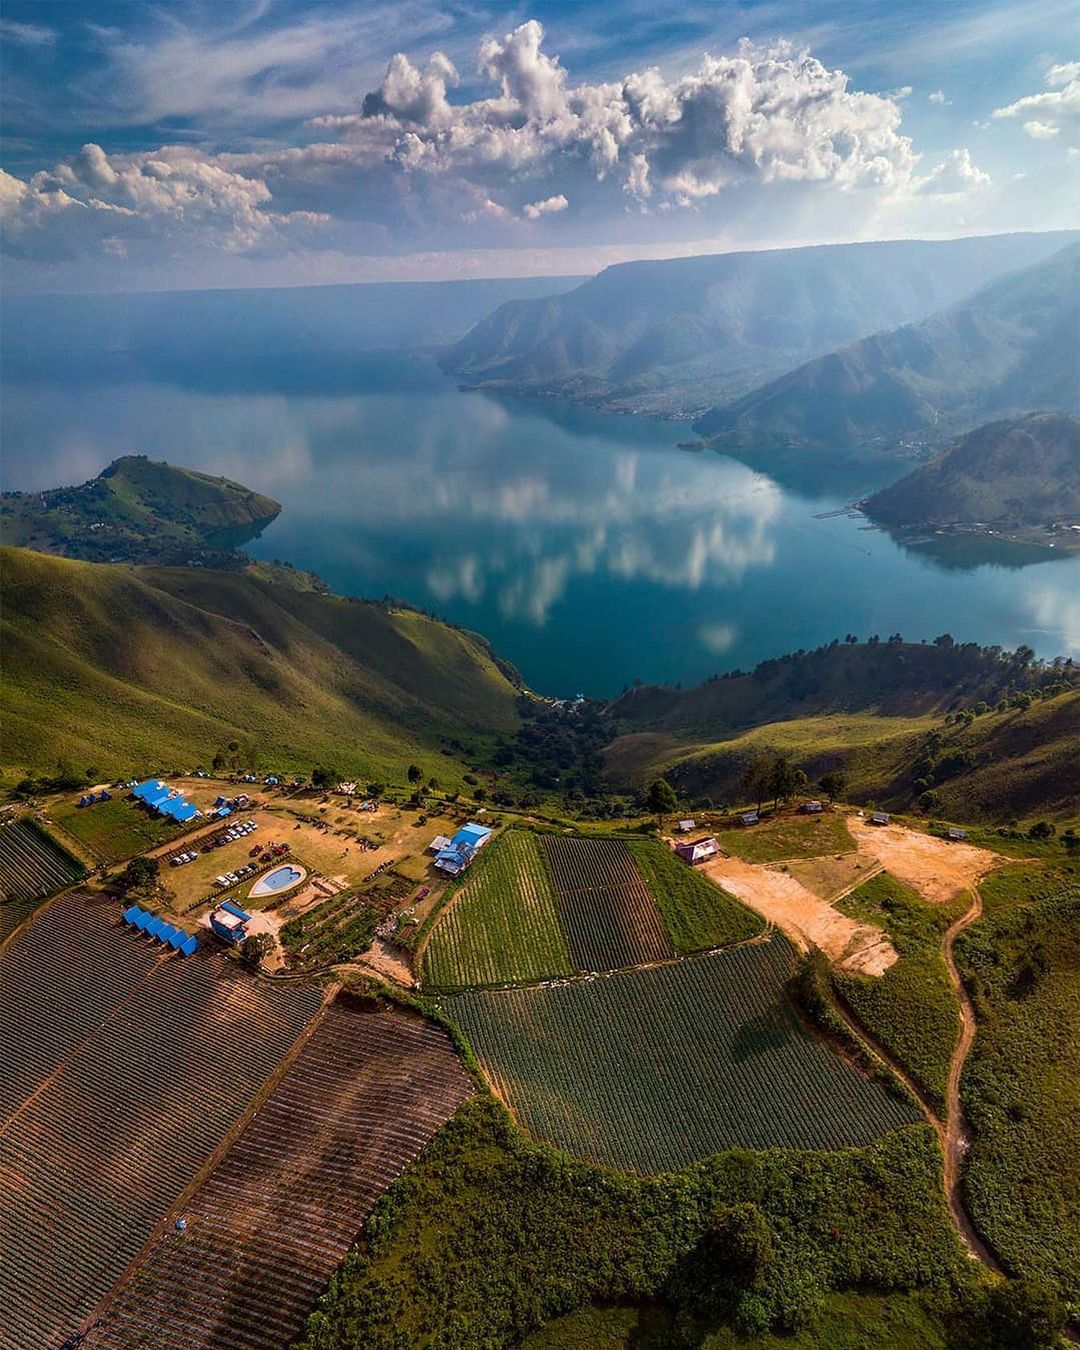 Journey to Indonesia's Hidden Gem: Tobatransporter.com Offers Unforgettable Lake Toba Tours